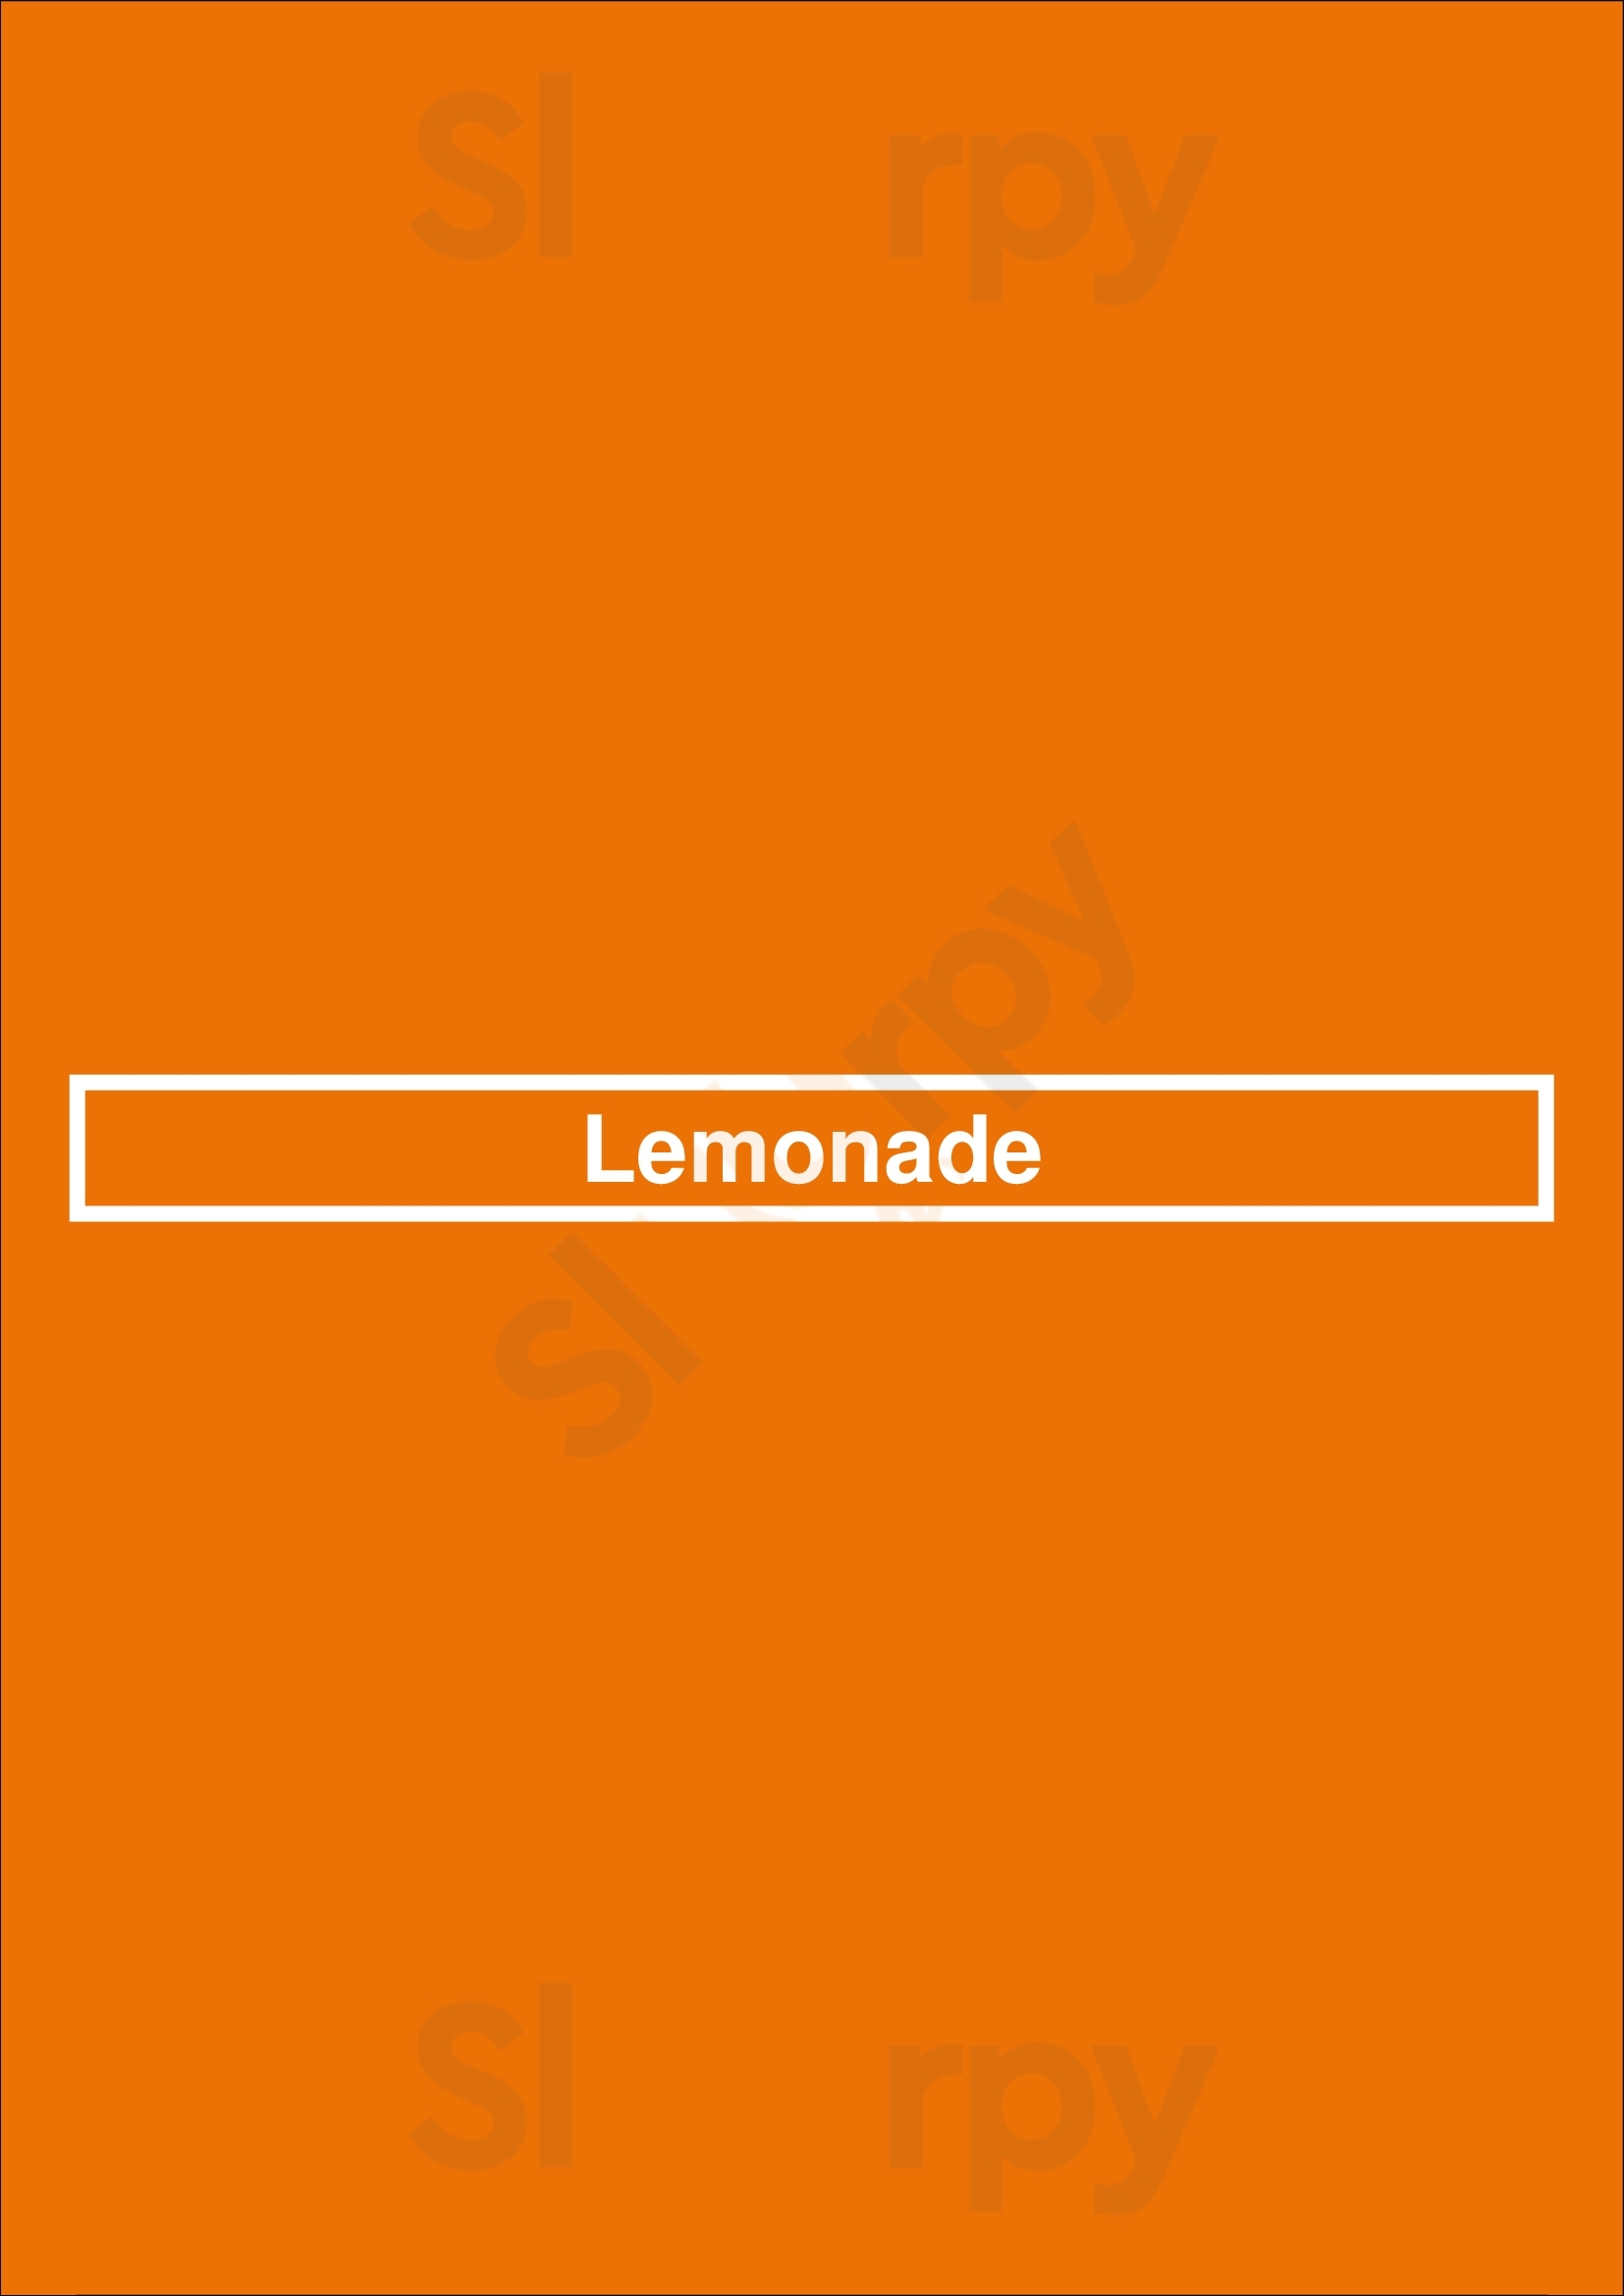 Lemonade Los Angeles Menu - 1